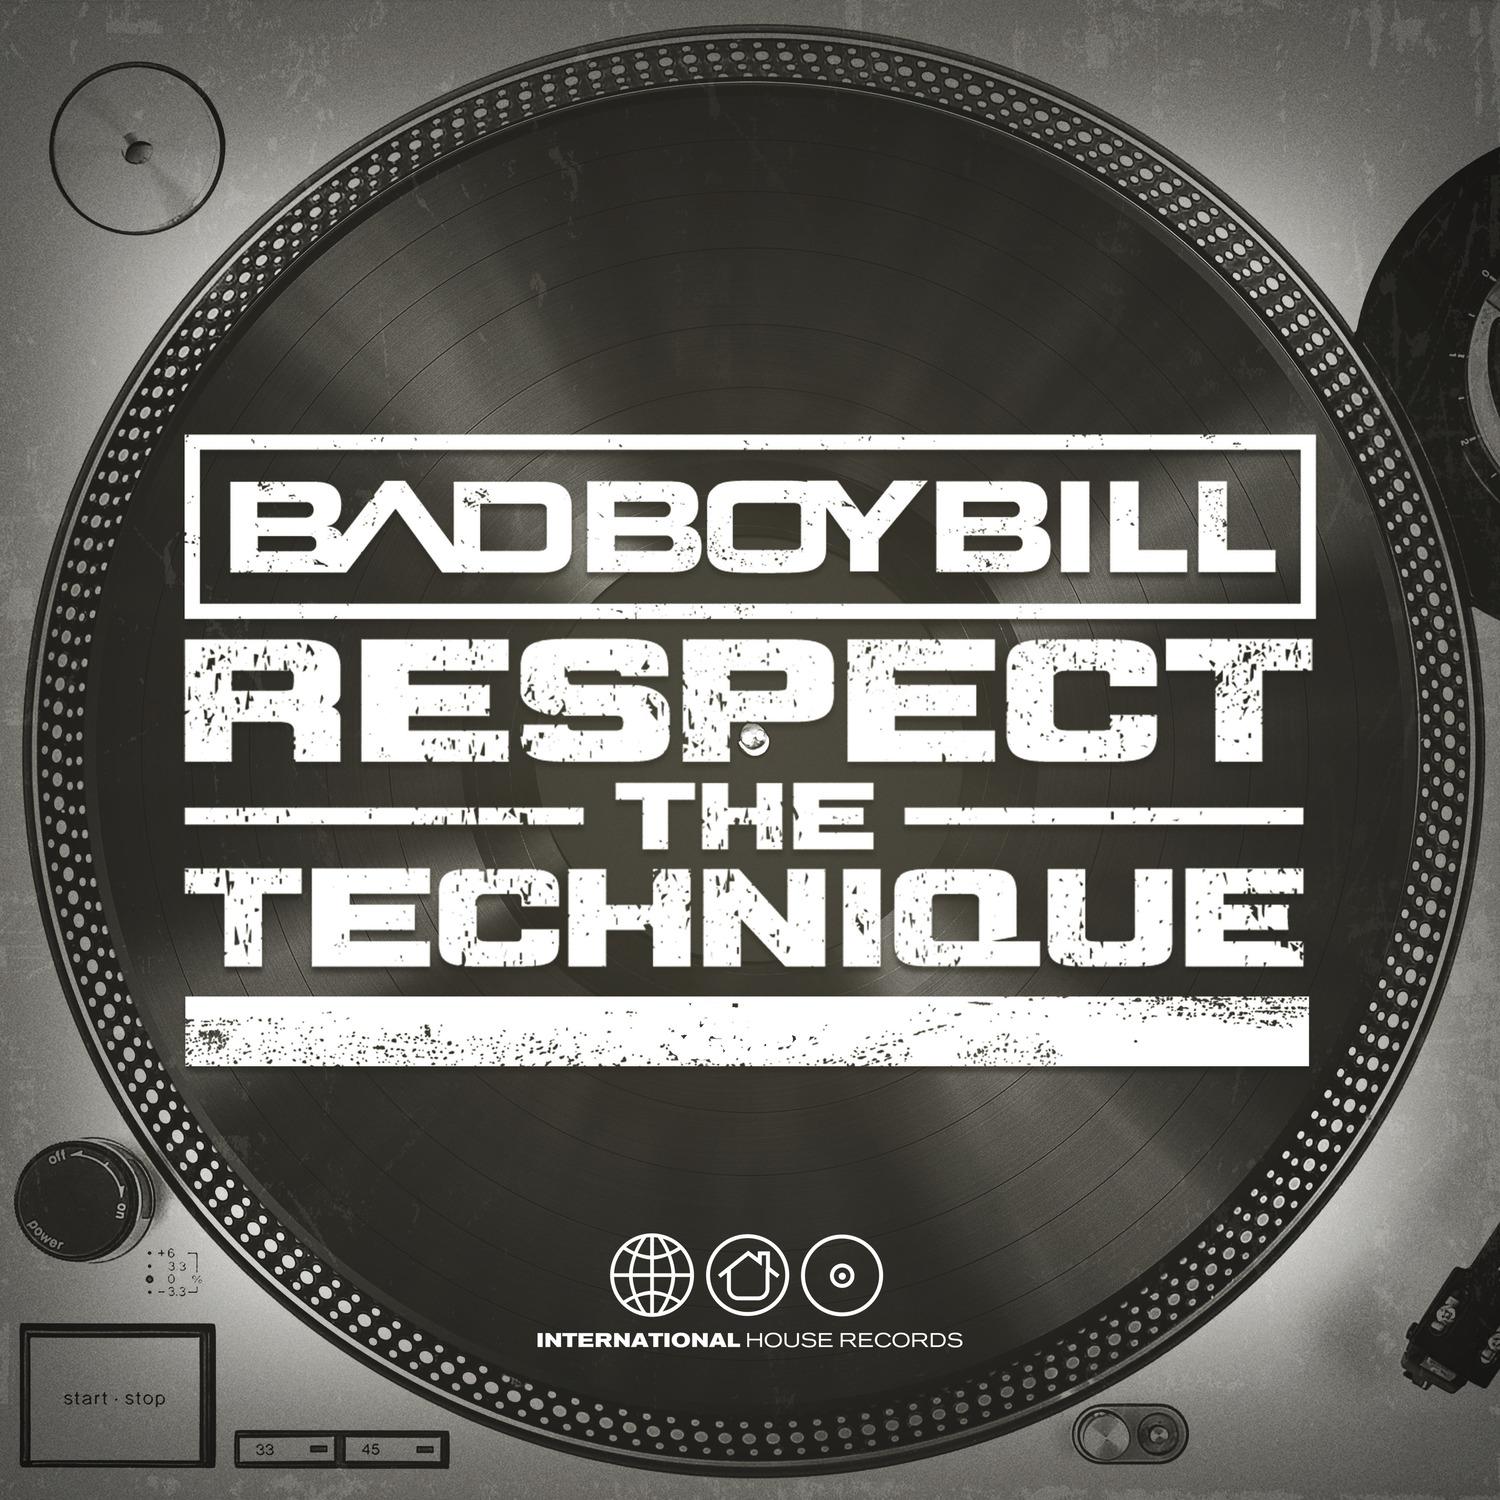 Bad Boy Bill - Baddest DJ